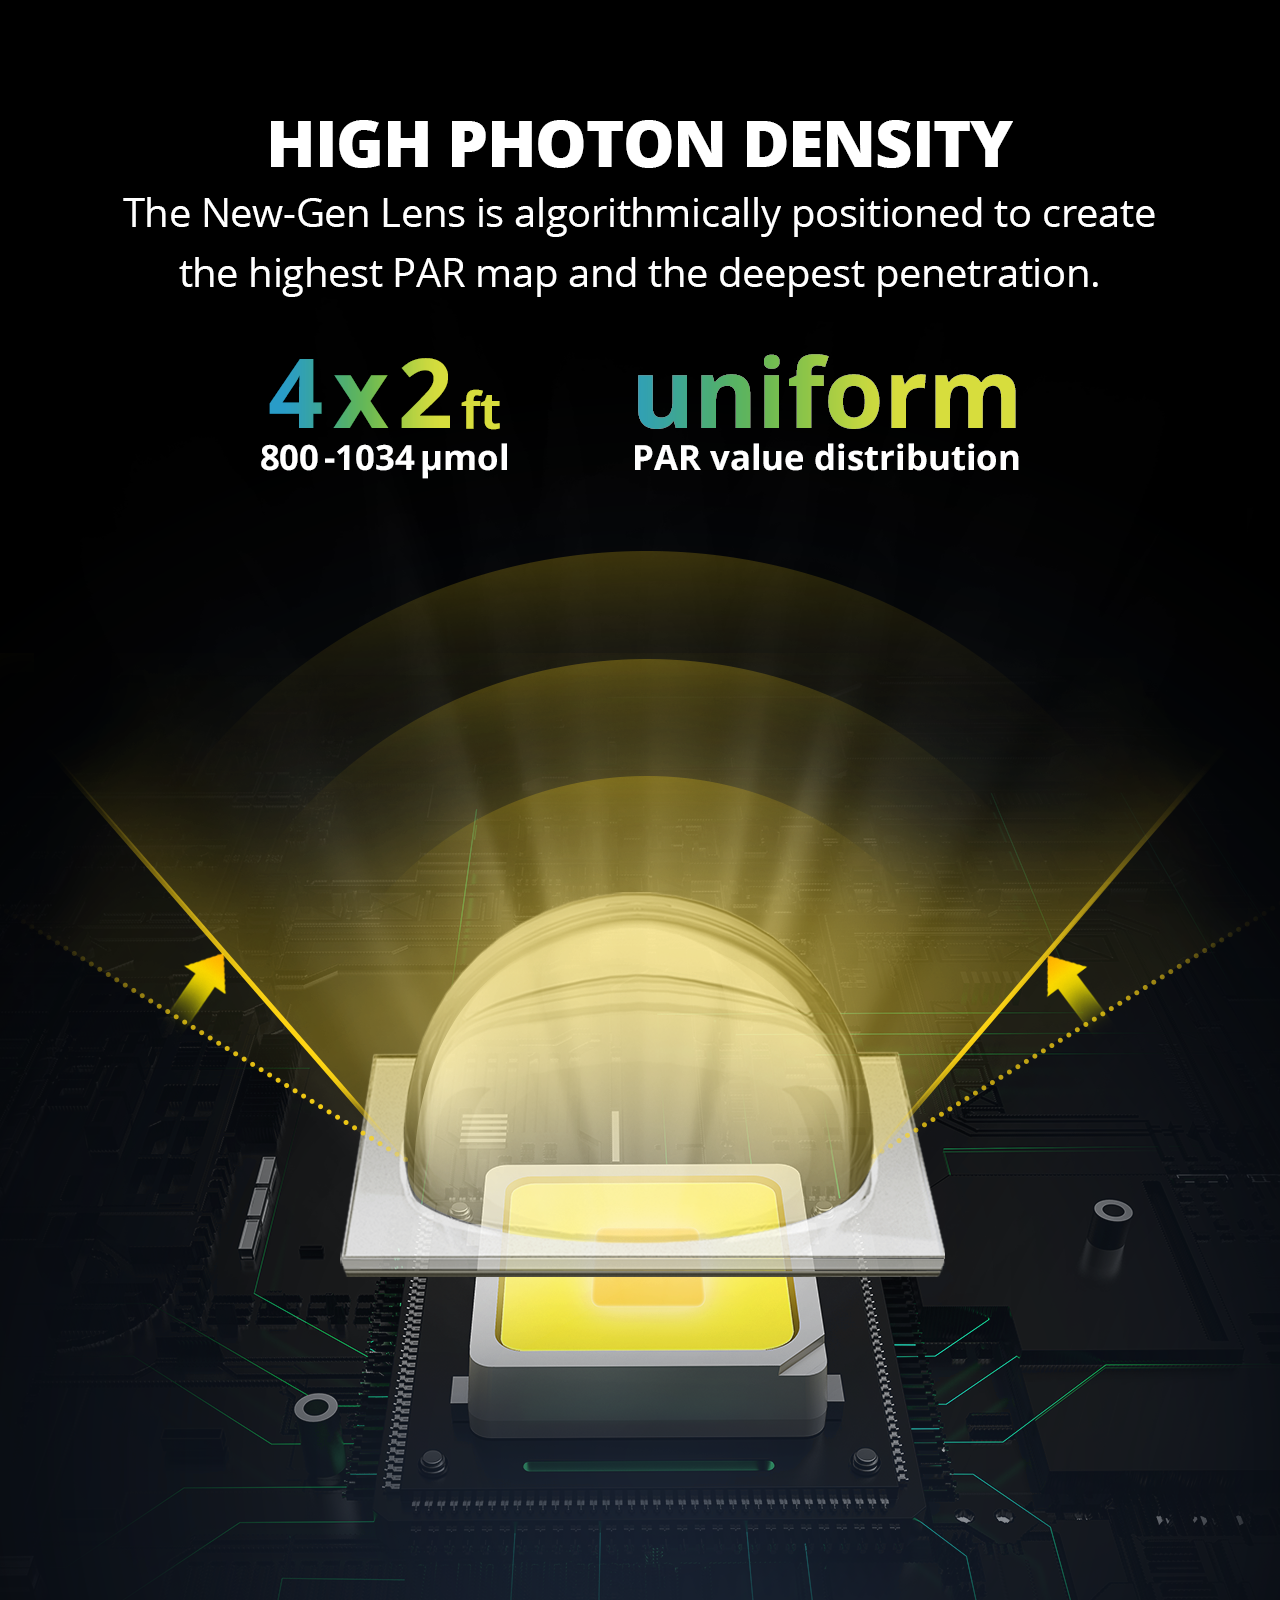 ViparSpectra 2023 Lens Design XS3000 Pro 300W LED Grow Light